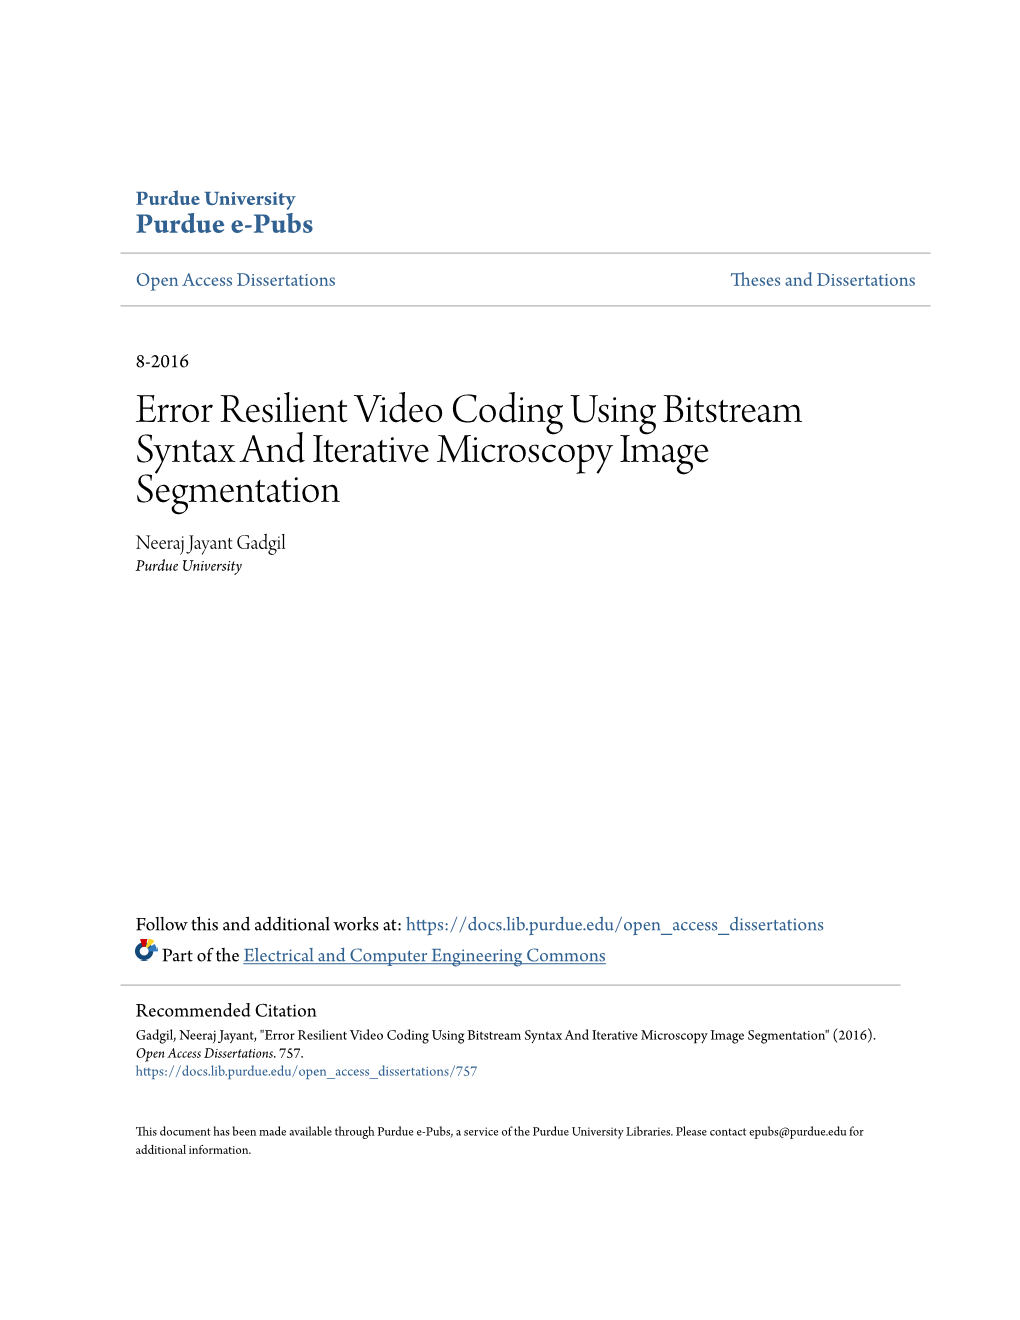 Error Resilient Video Coding Using Bitstream Syntax and Iterative Microscopy Image Segmentation Neeraj Jayant Gadgil Purdue University